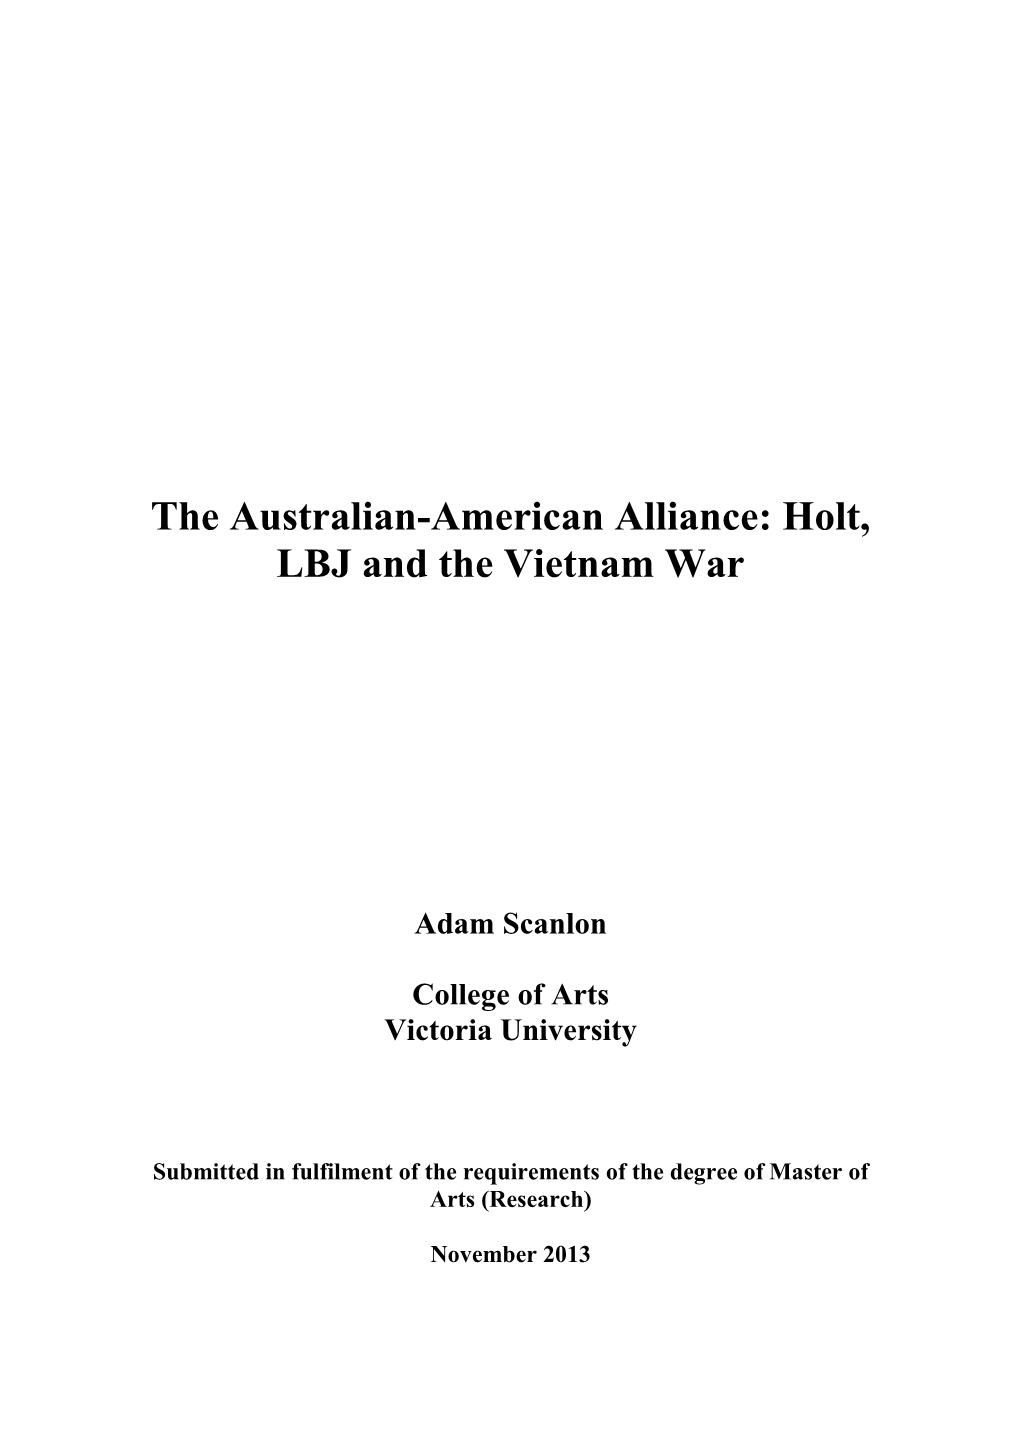 The Australian-American Alliance: Holt, LBJ and the Vietnam War